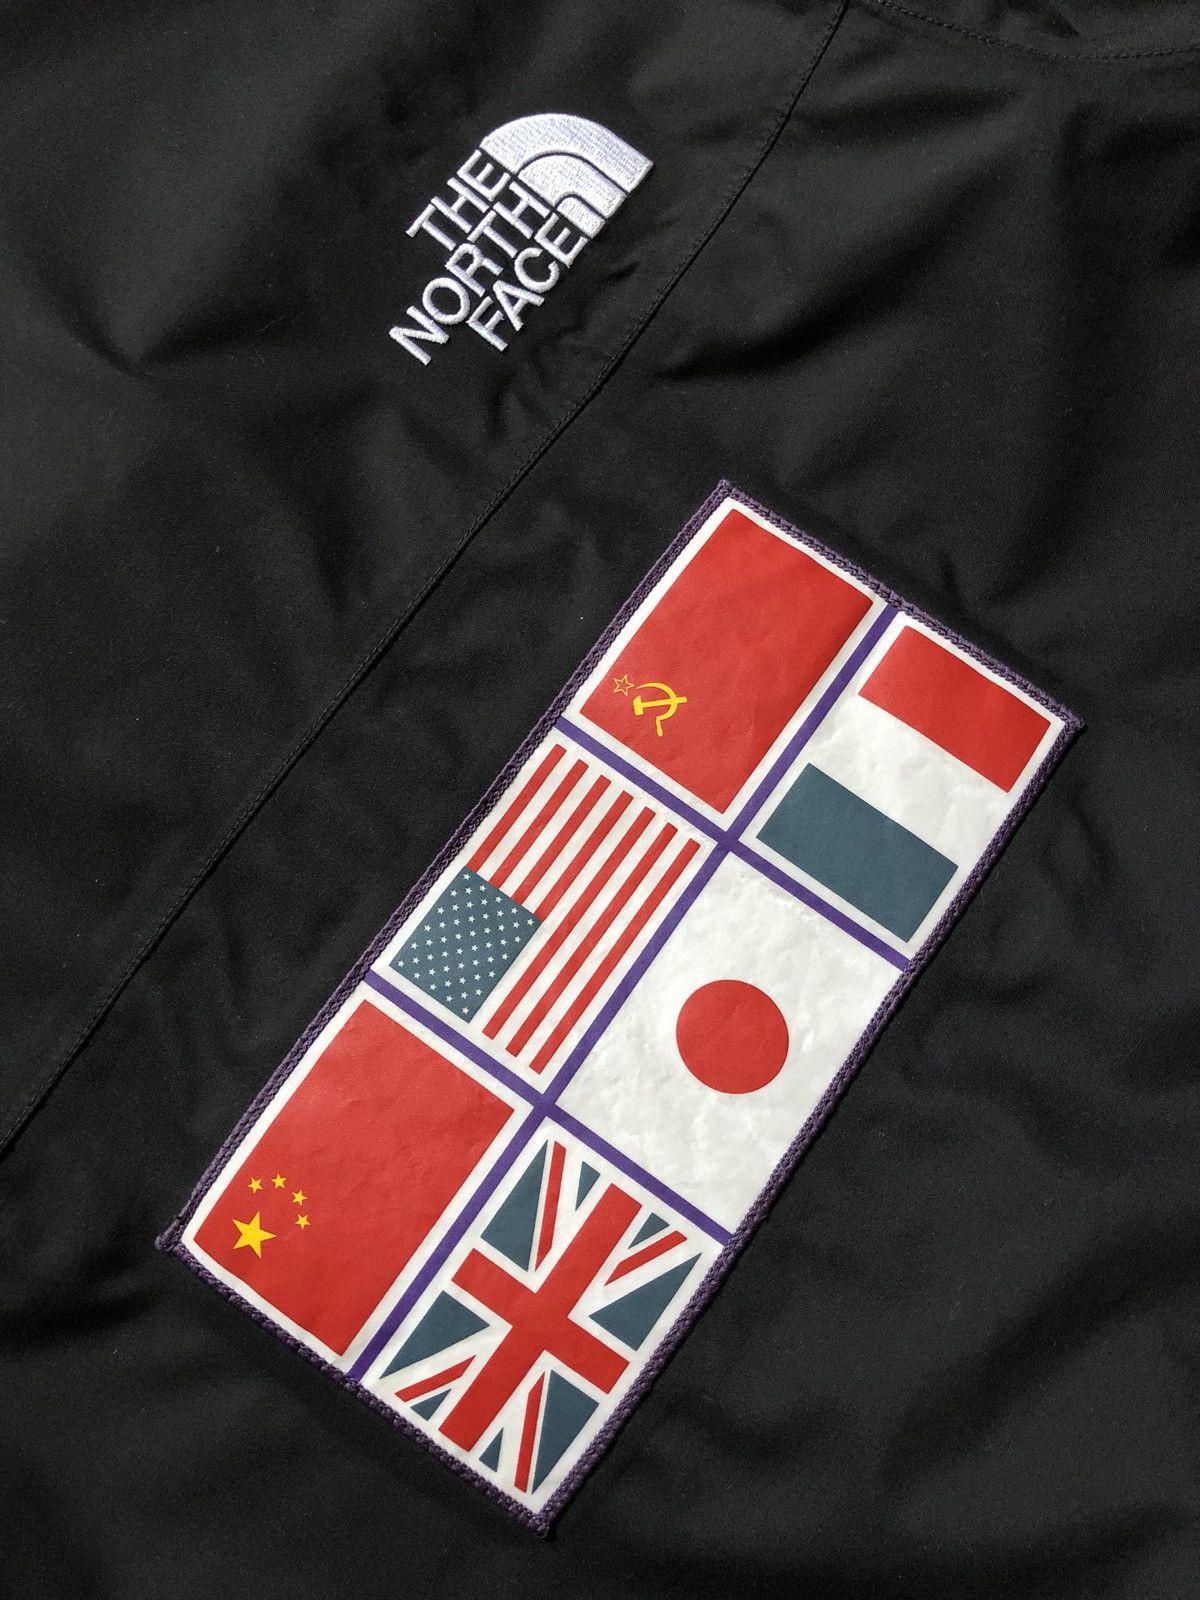 Supreme Supreme The North Face Expedition Coaches Jacket Large Black Size US L / EU 52-54 / 3 - 4 Thumbnail